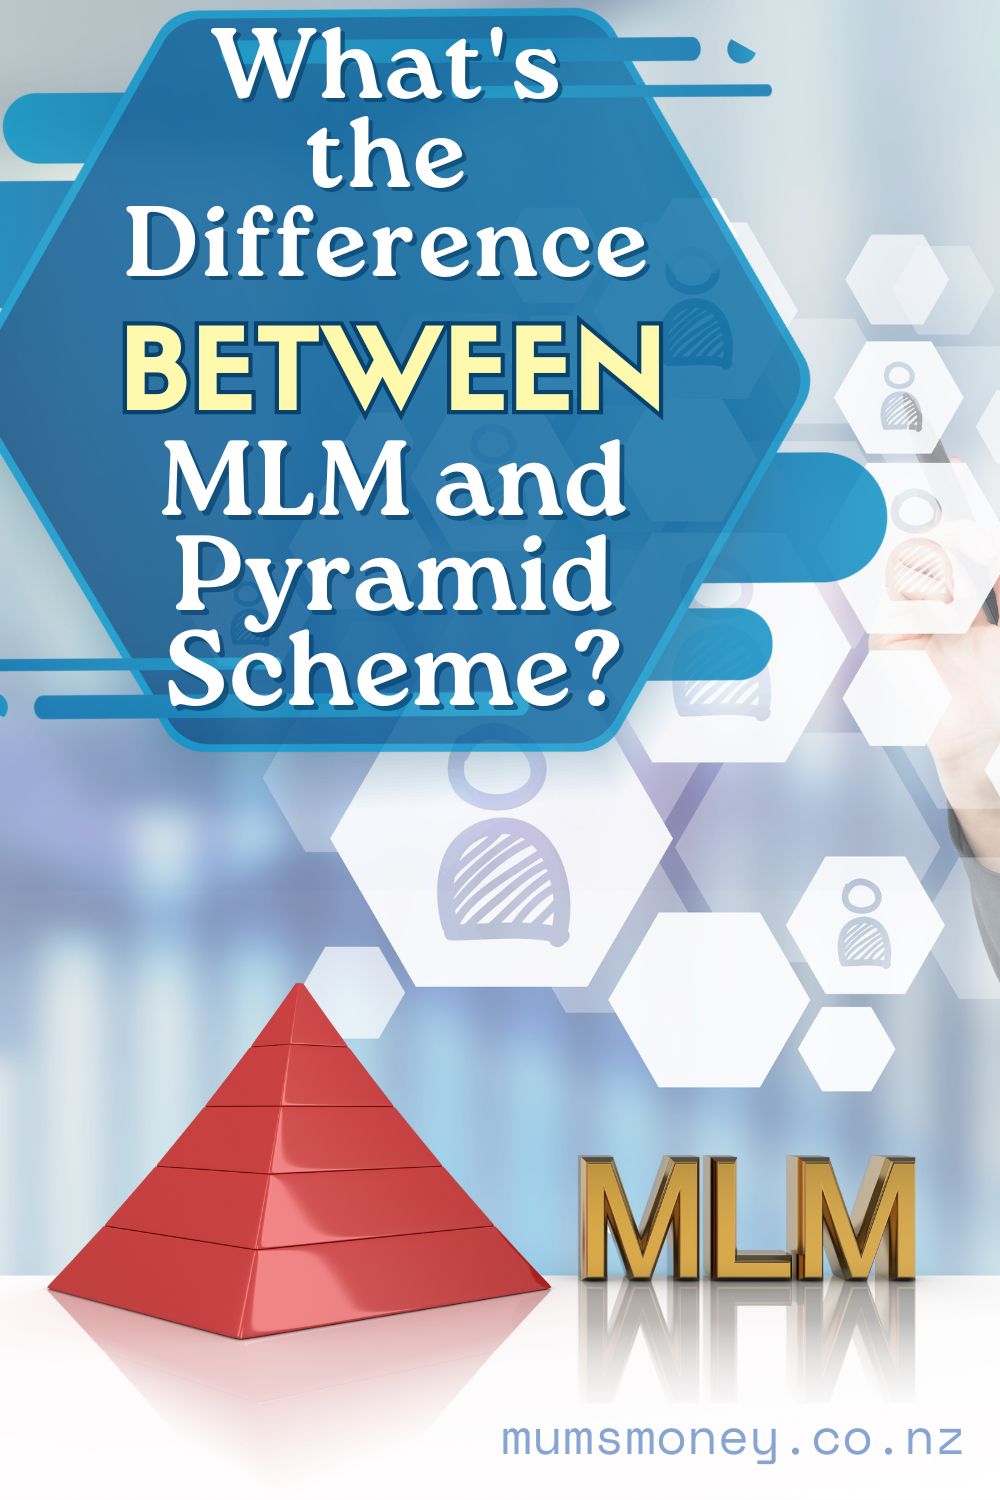  MLM and Pyramid Scheme